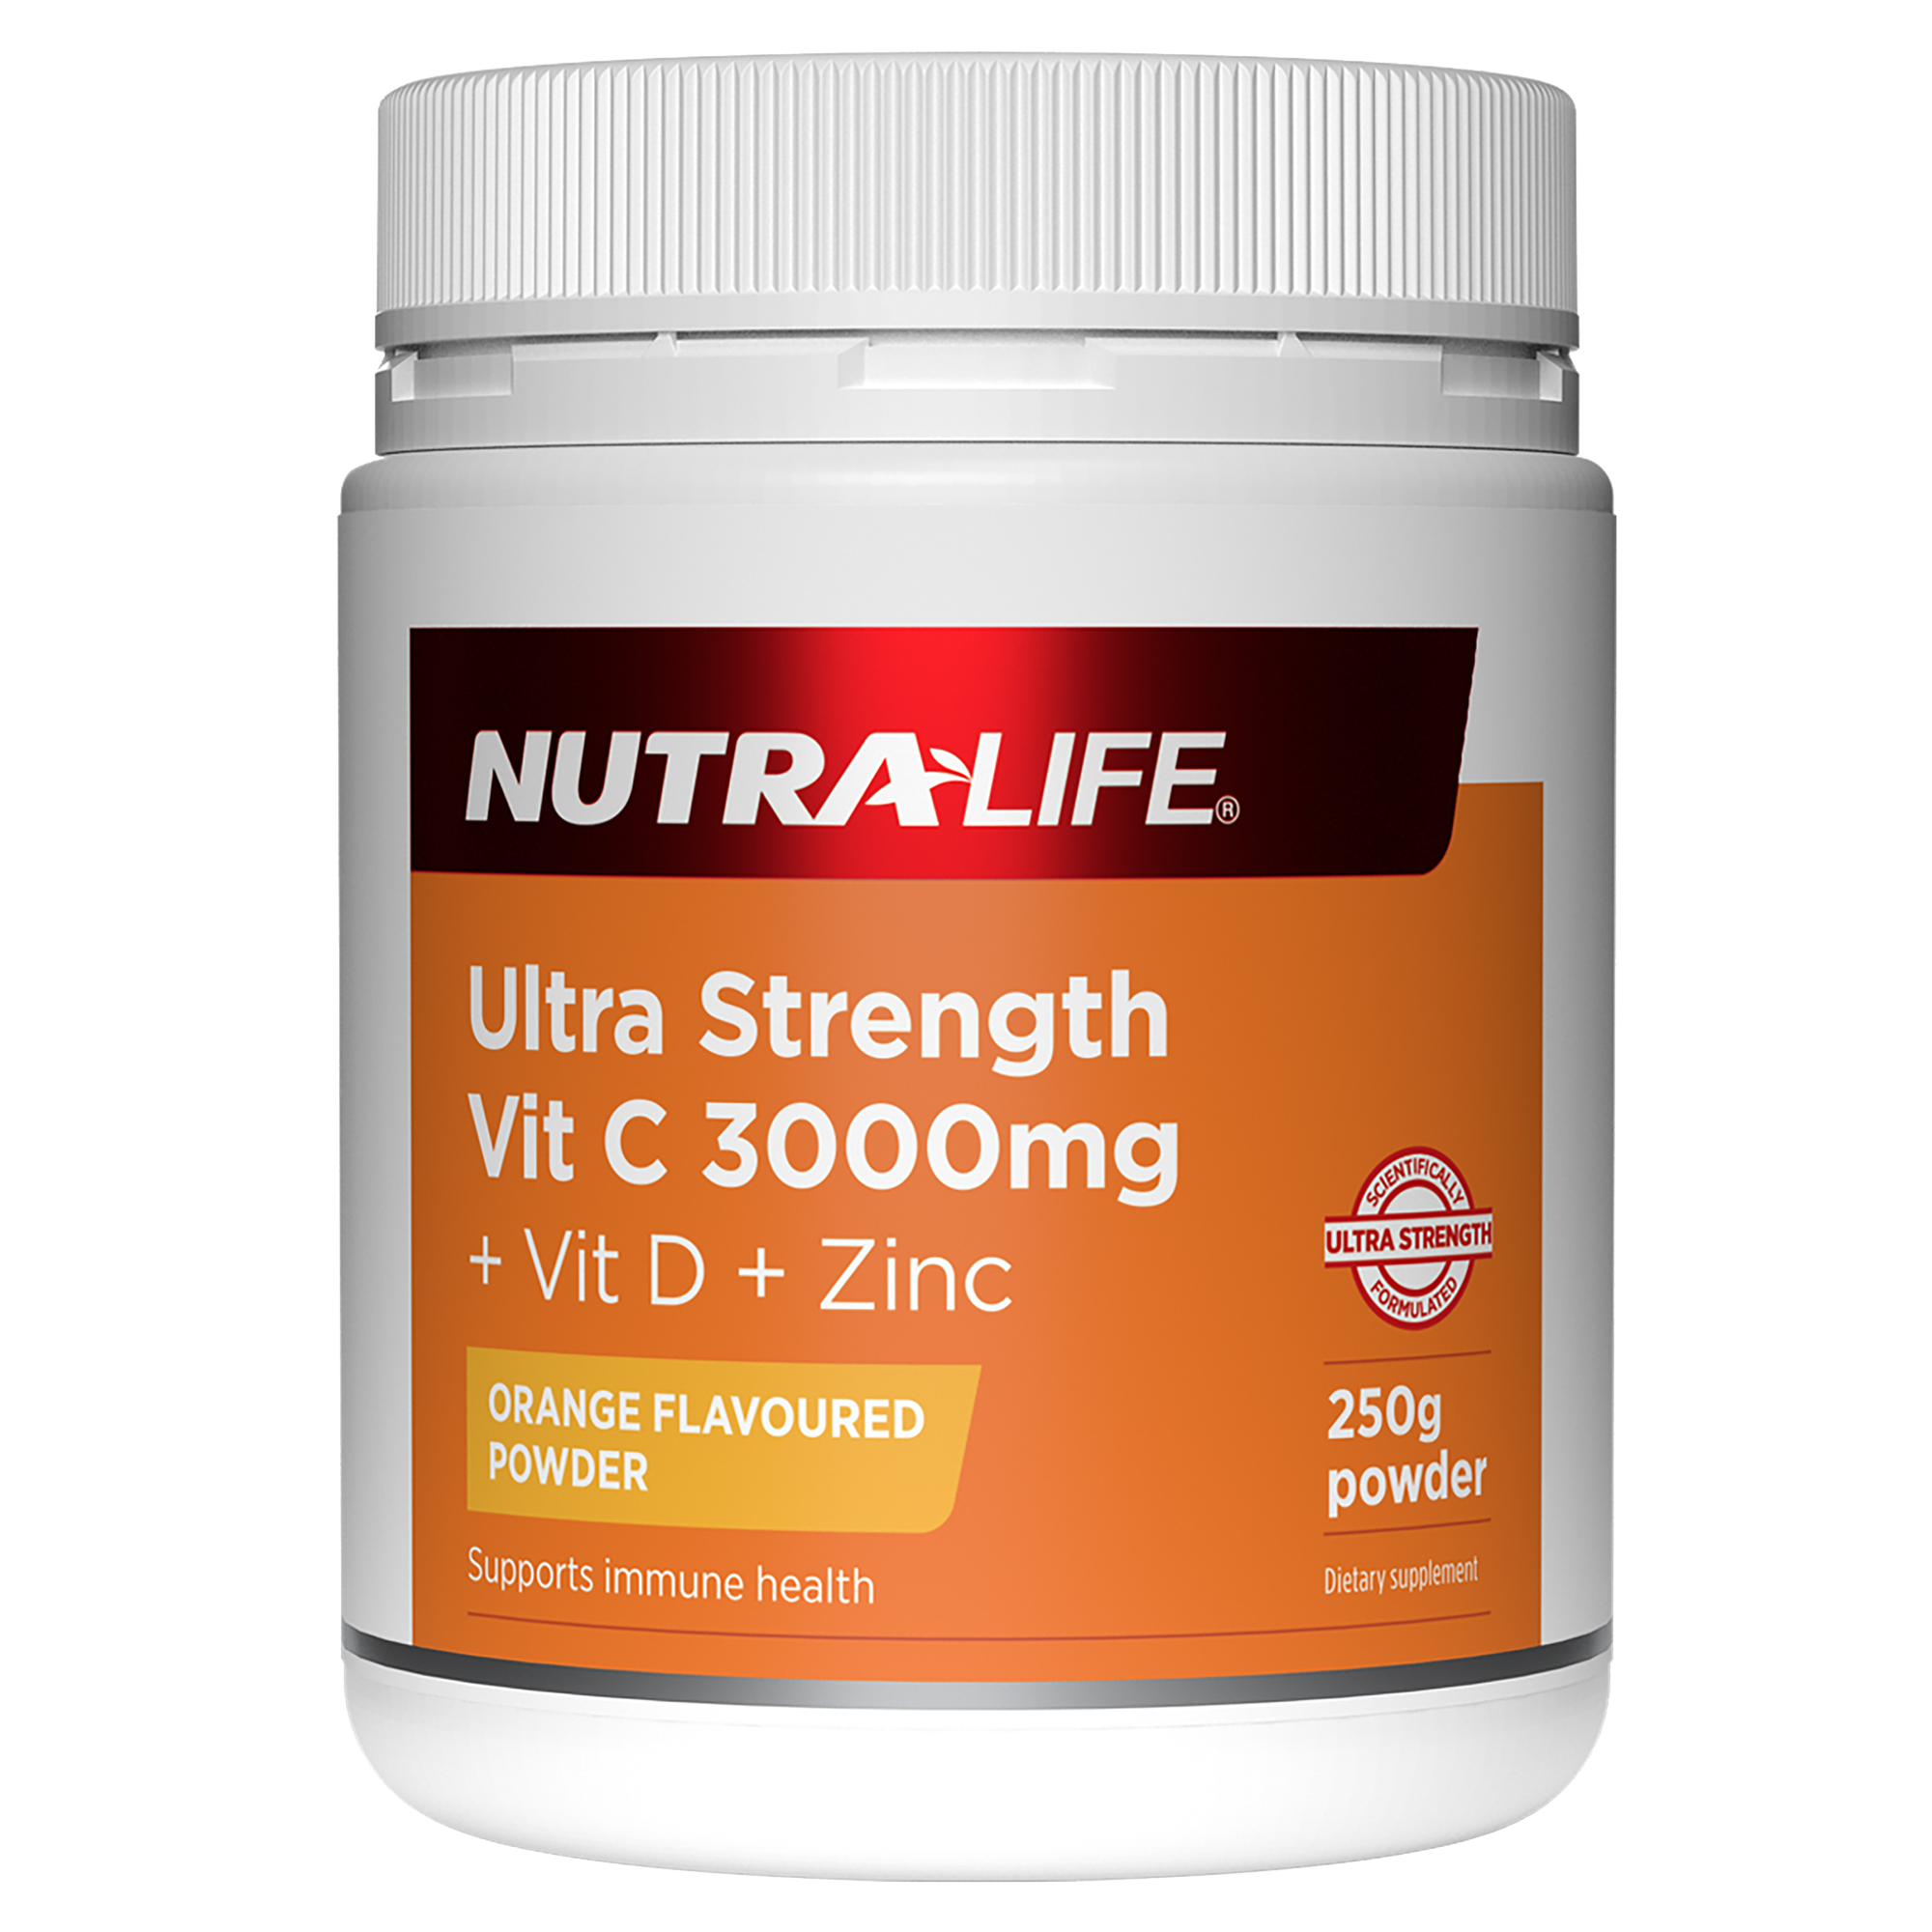 NutraLife Ultra strength Vit C 3000mg + Vit D + Zinc